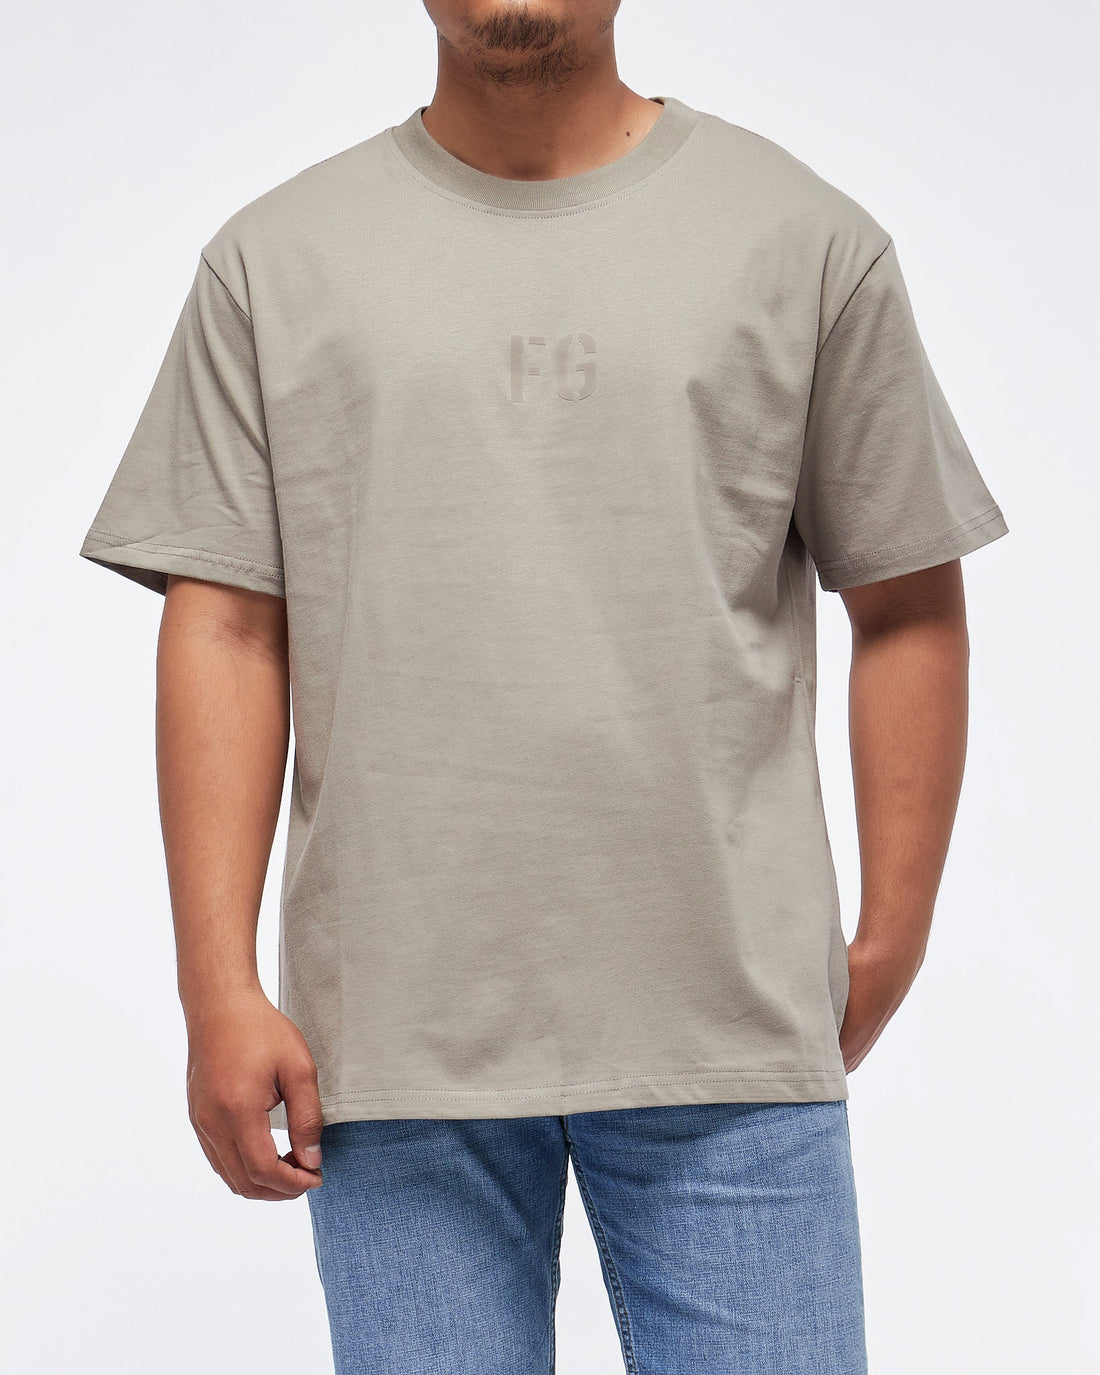 MOI OUTFIT-FG Logo Printed Men T-Shirt 15.90